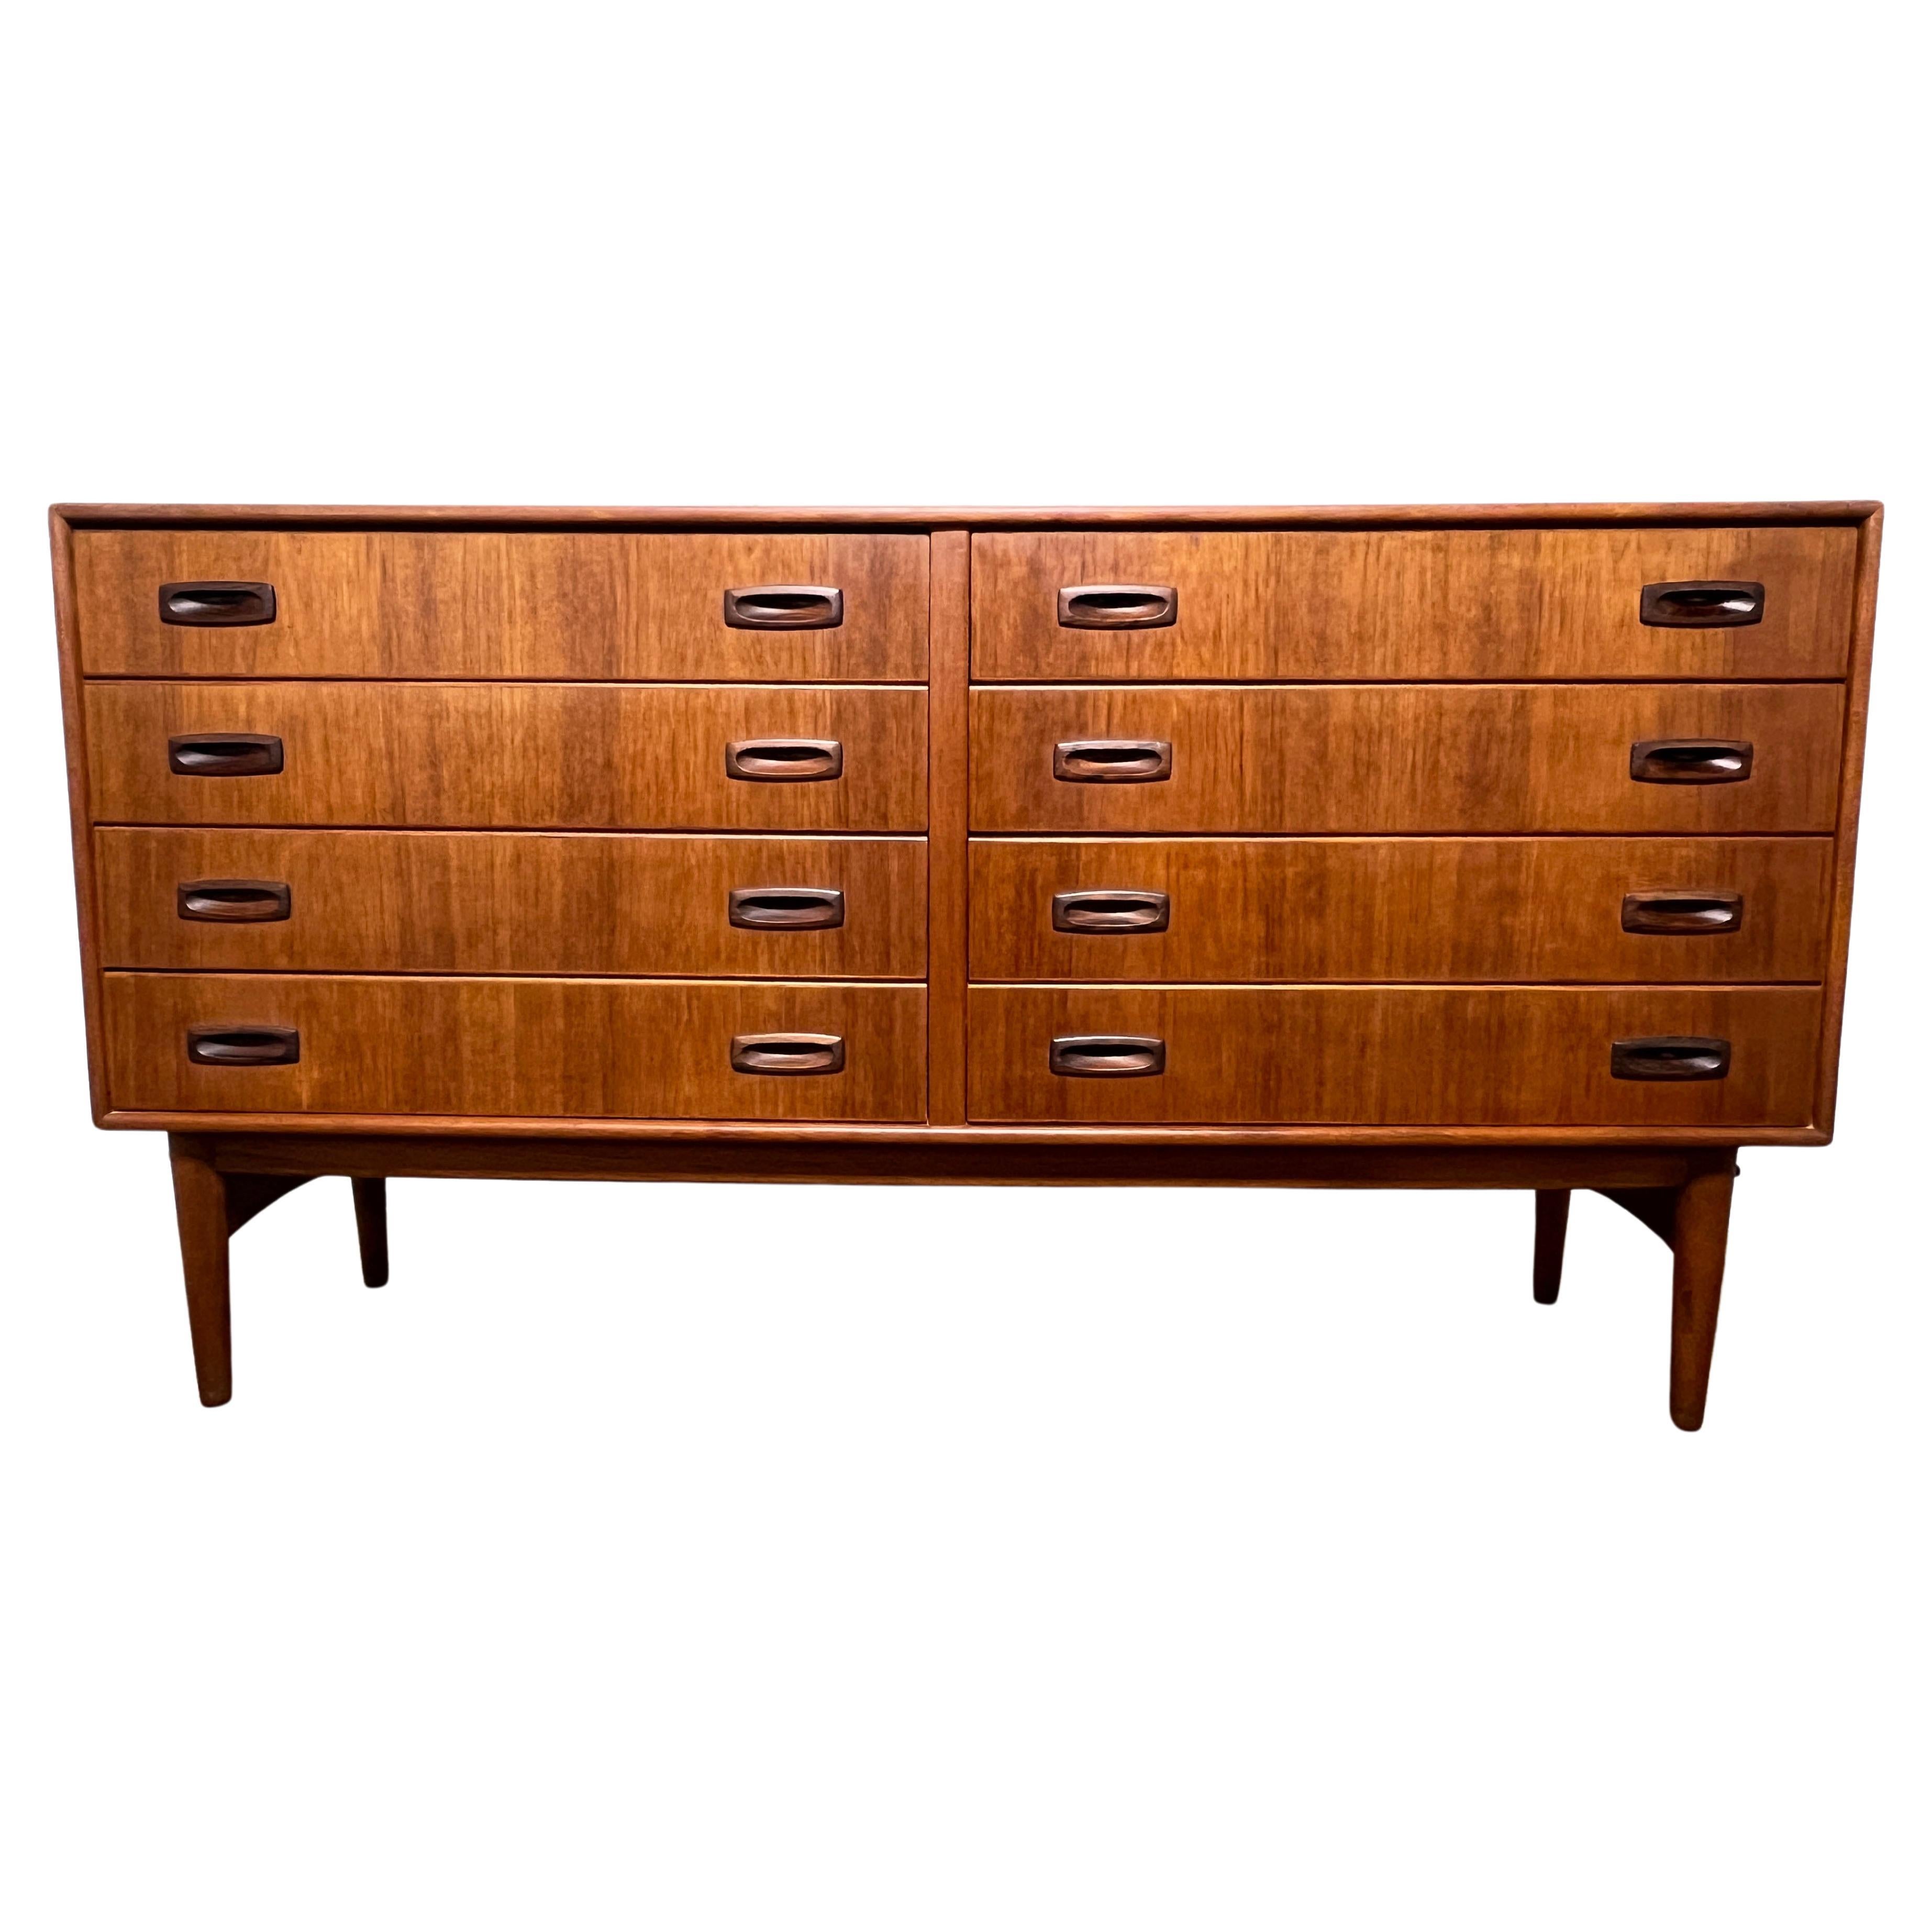 Eight drawer dresser in teak with contrasting rosewood handles by Arne Hovmand-Olsen, Denmark, ca. 1960s.